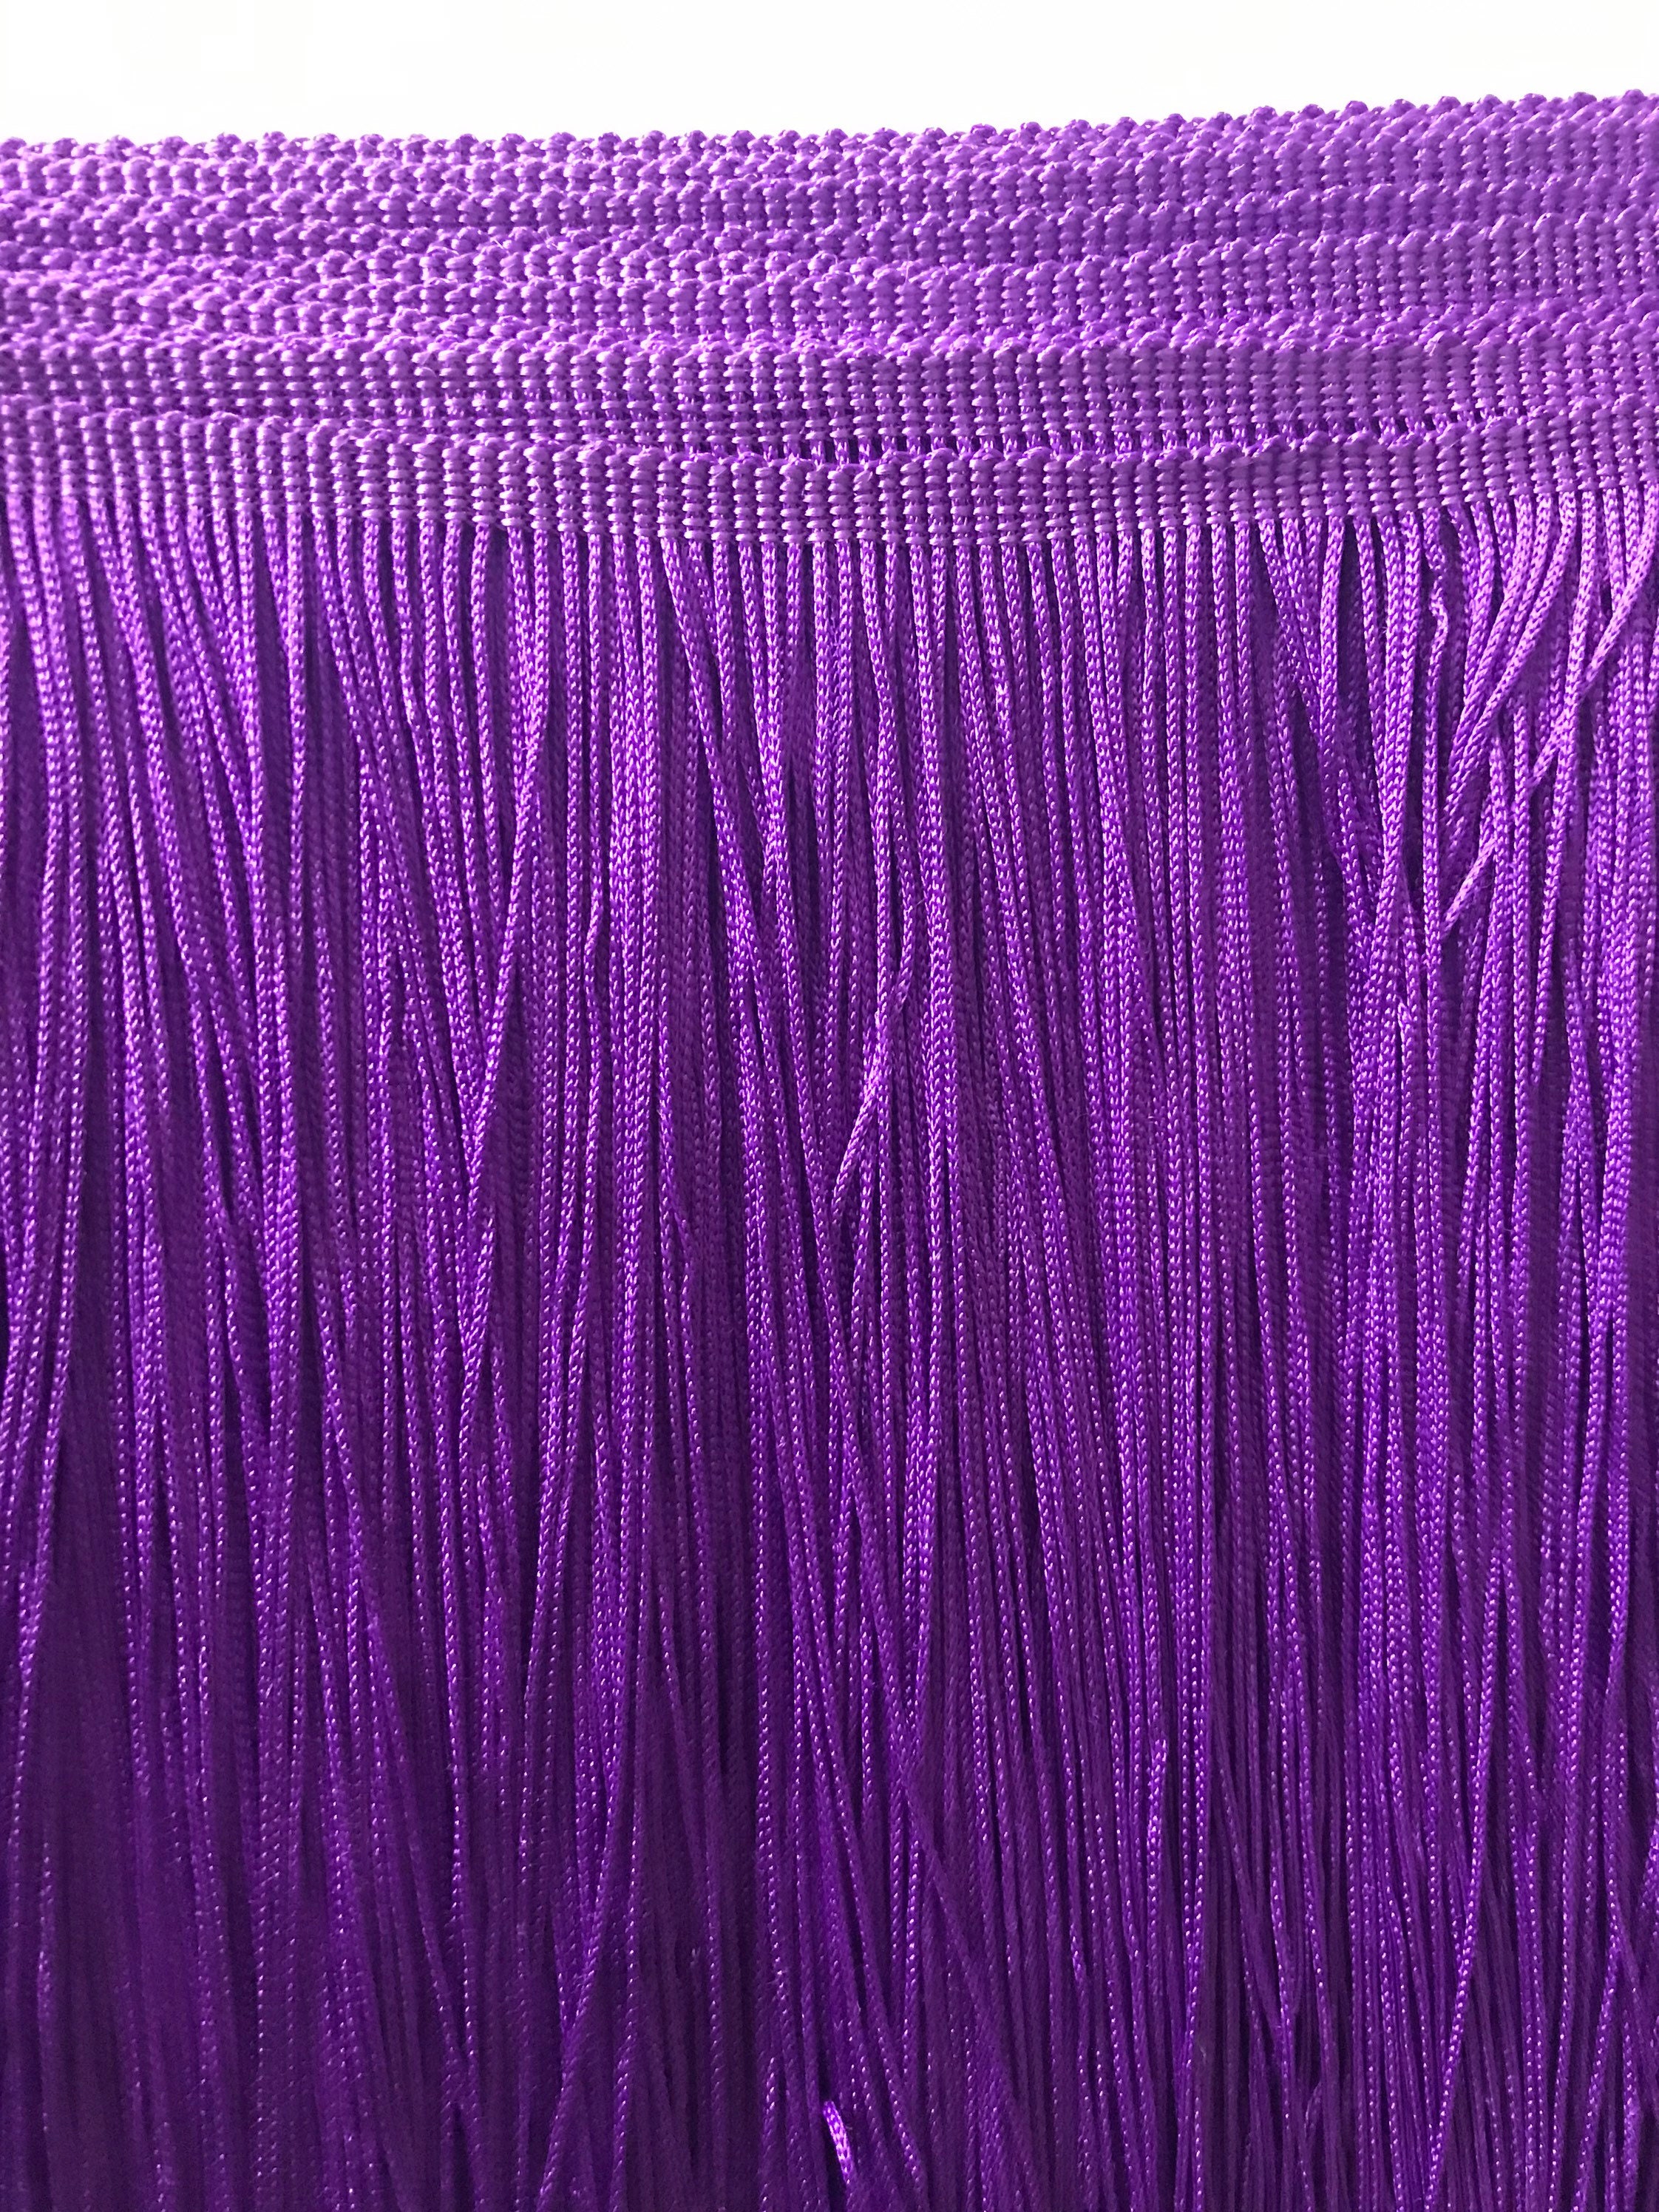 Purple Fringe | Hot Sex Picture